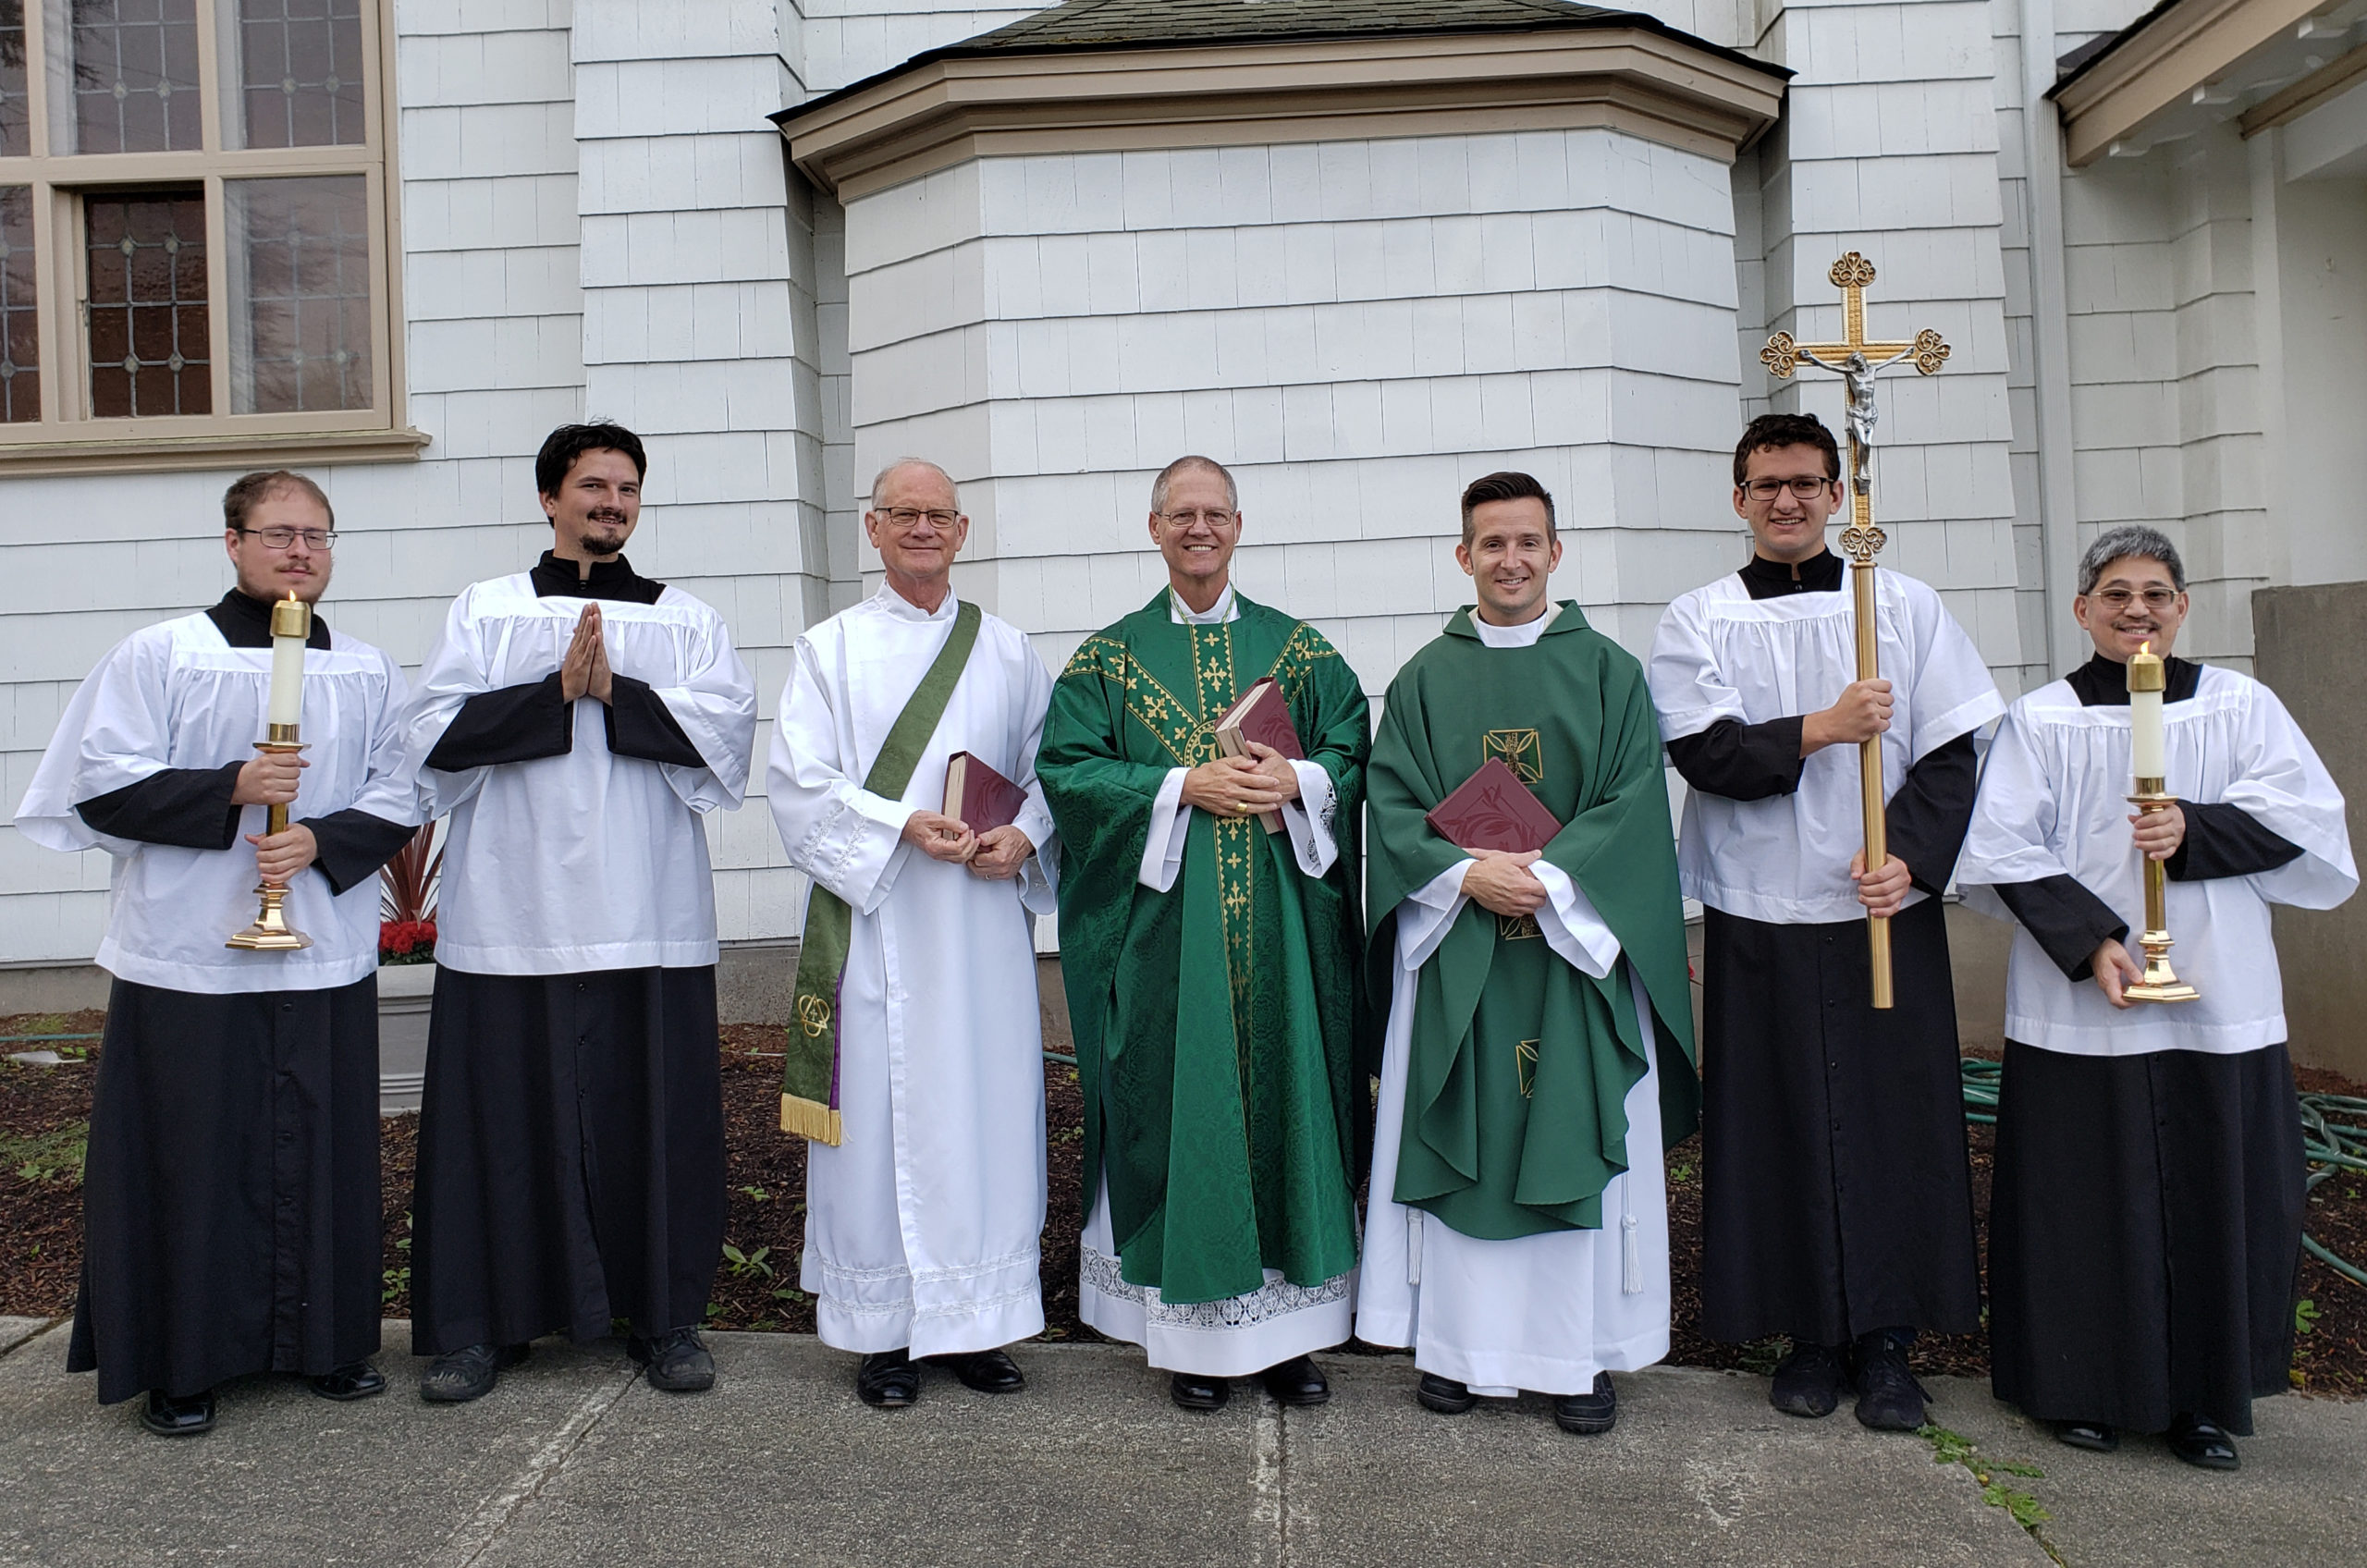 Archbishop Paul D. Etienne, Deacon Pierce Murphy, Rev. Cody Ross outside Sacred Heart, Bellingham, WA. Altar Servers, crucifix, green, books. September 19, 2019.